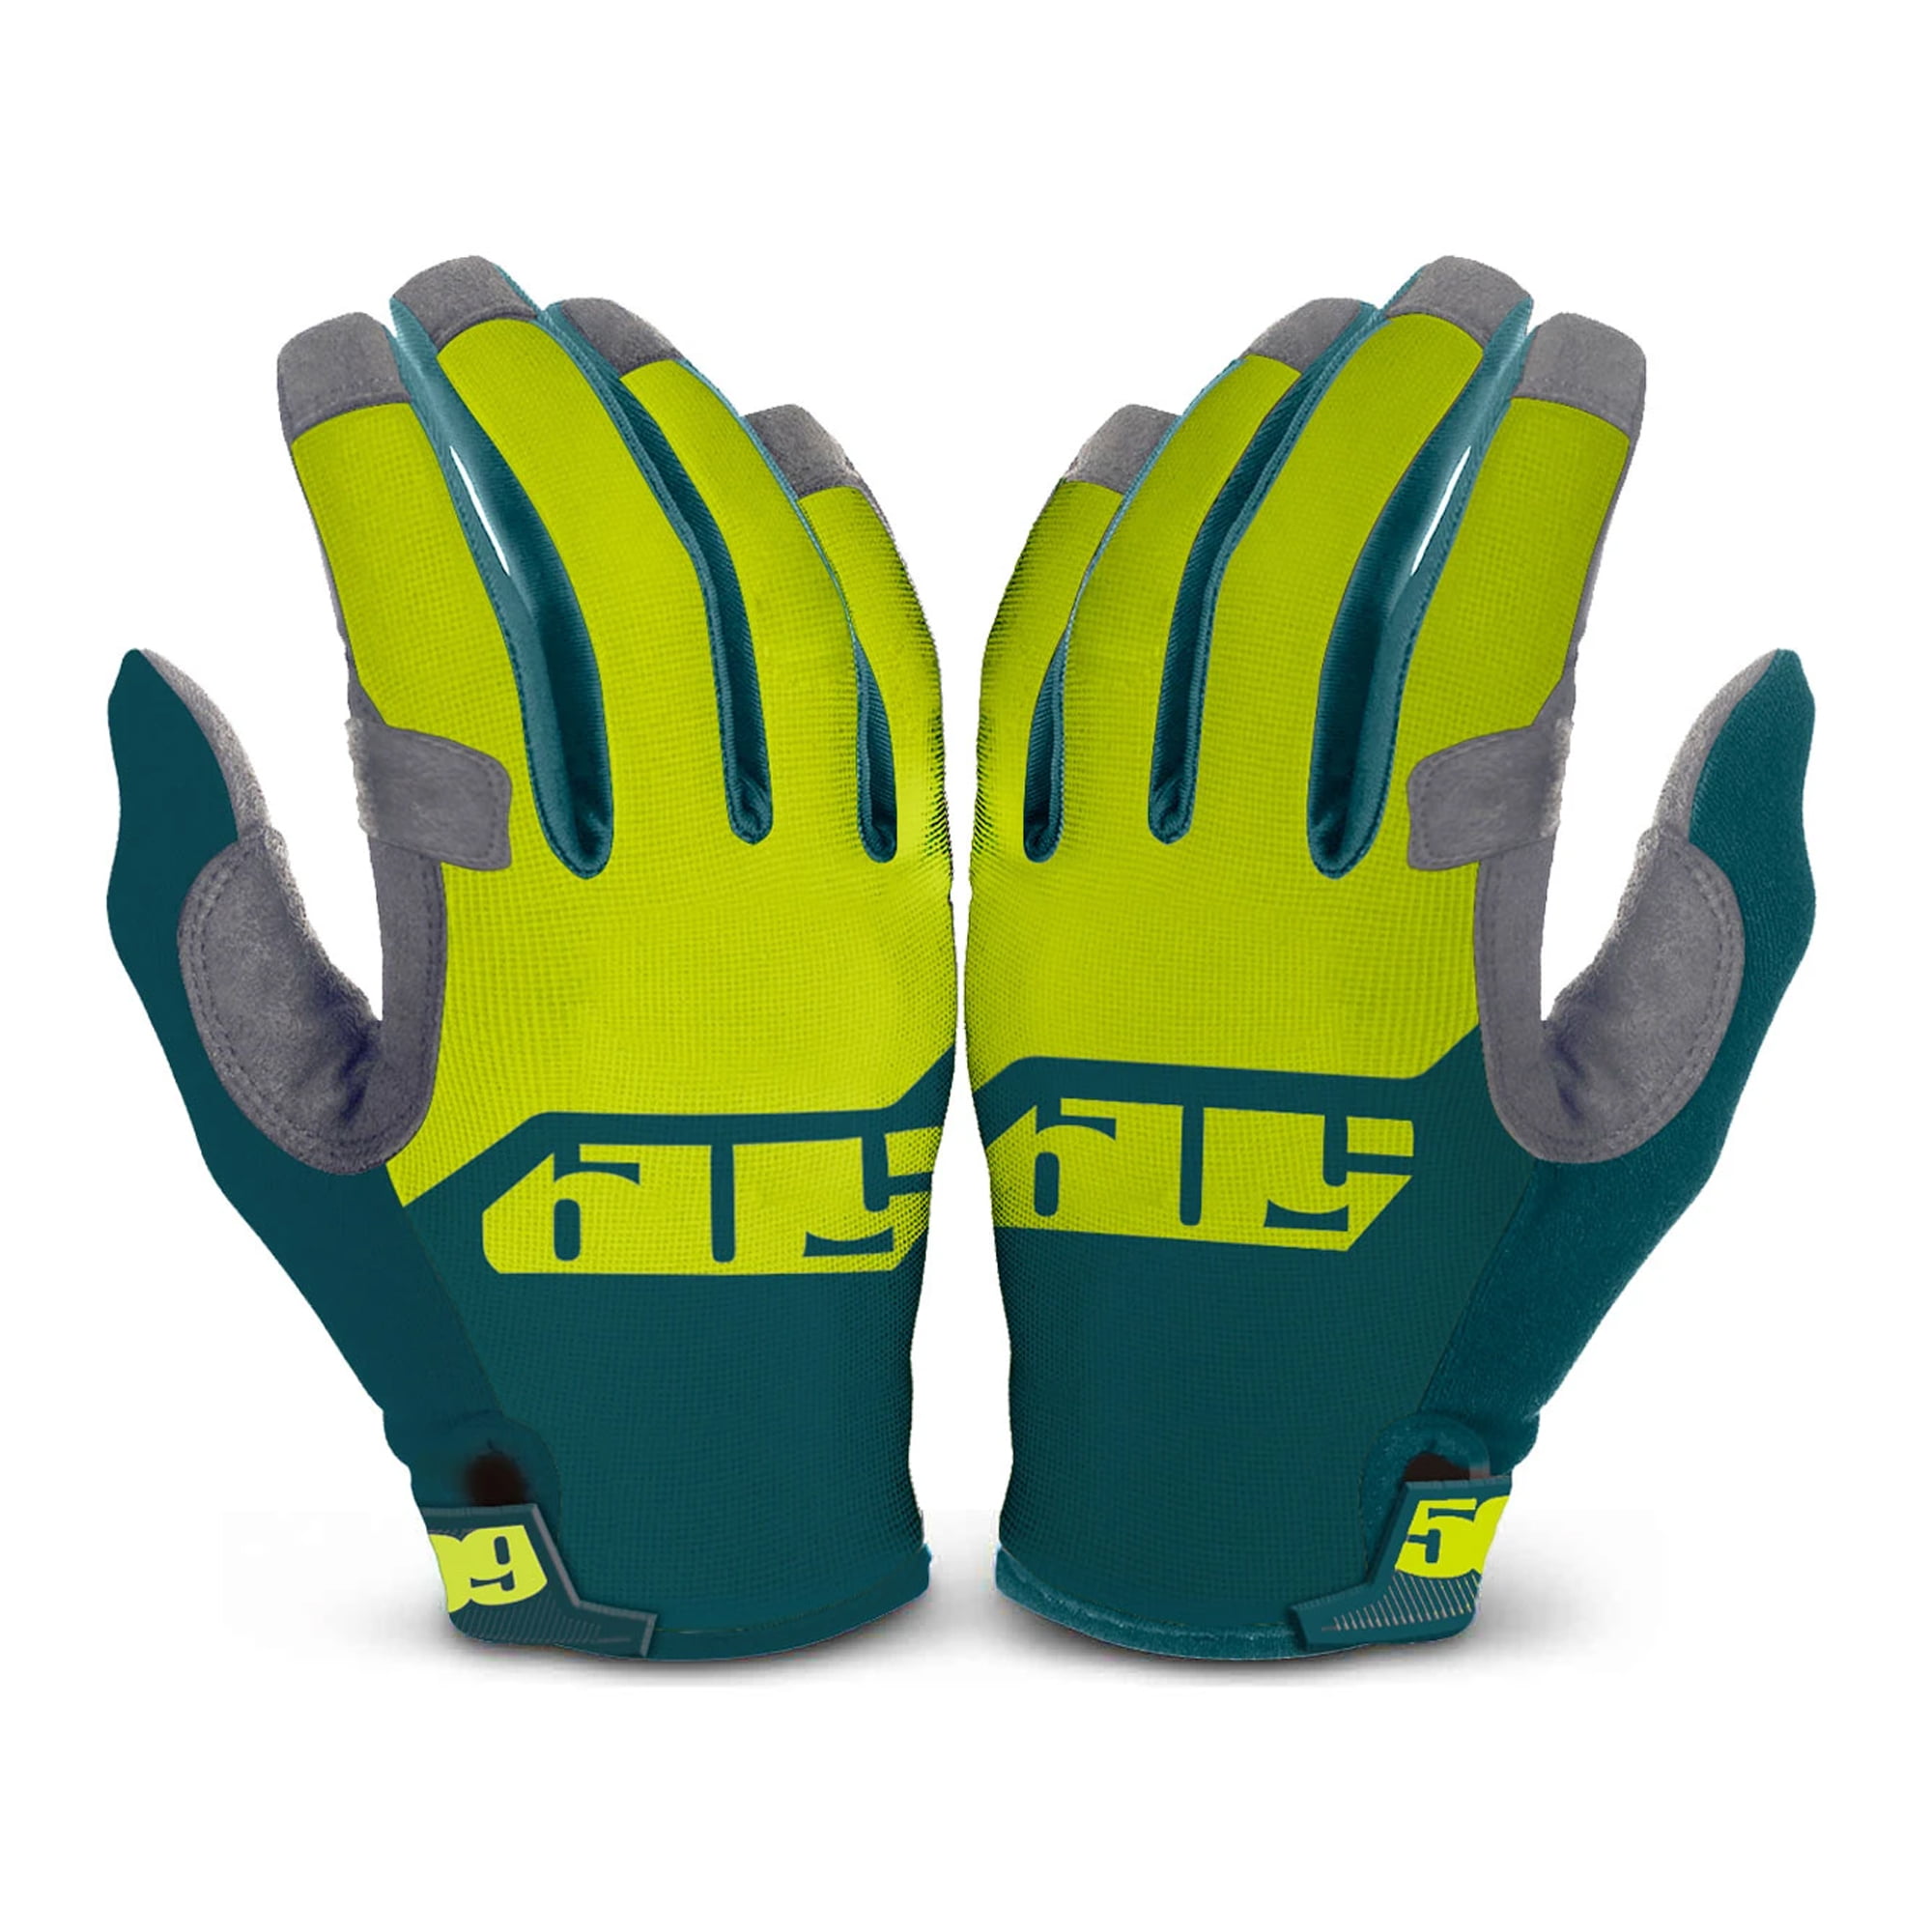 Glacier Glove Hybrid Glove Thin Windproof Fleece Glove w/ Sharkskin Grip Palm 